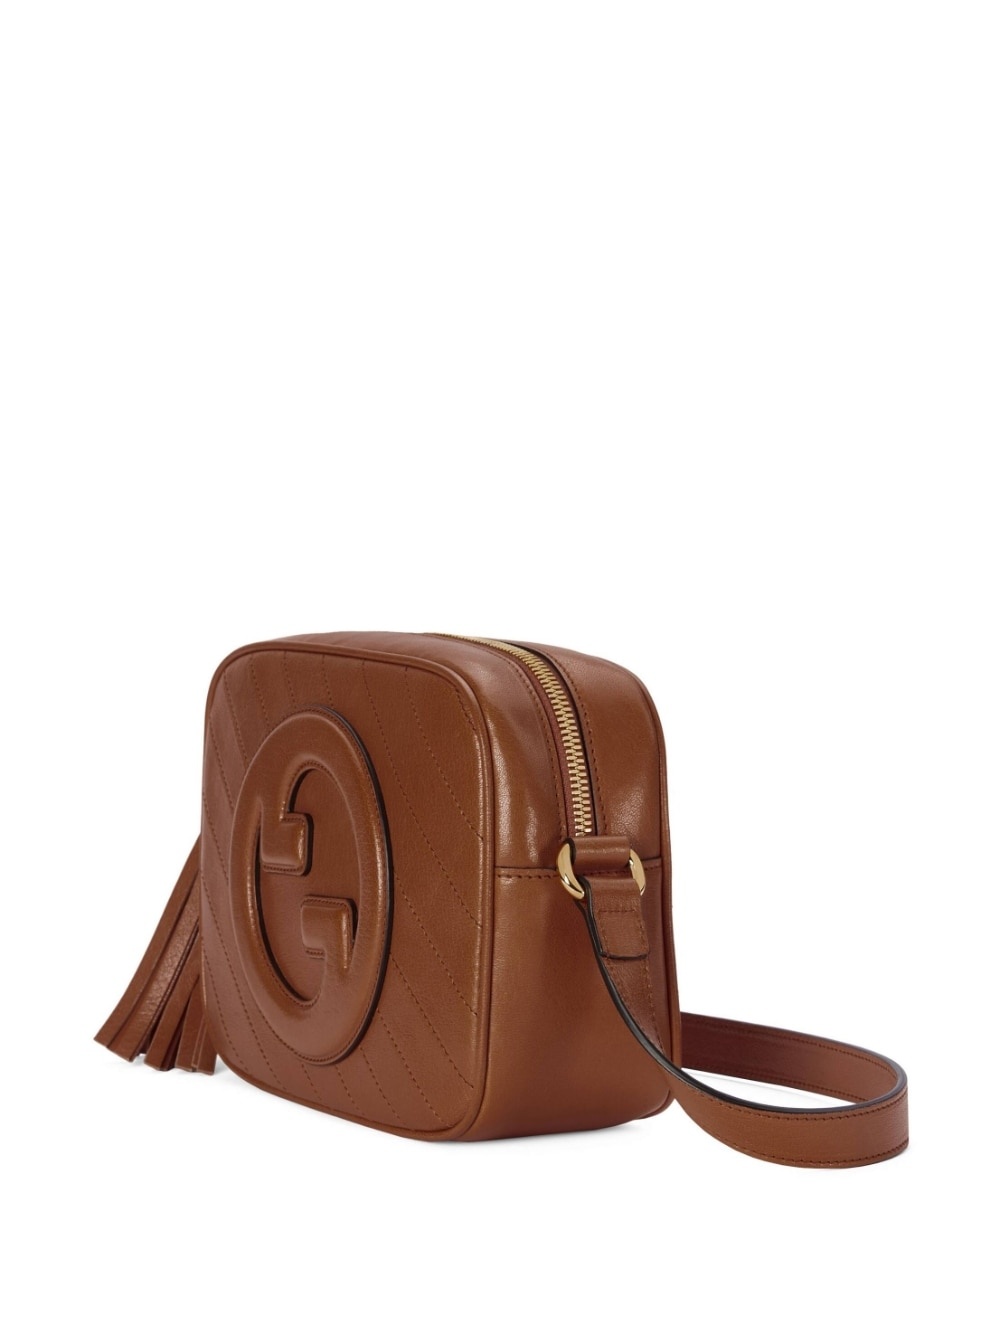 Blondie leather crossbody bag - 3